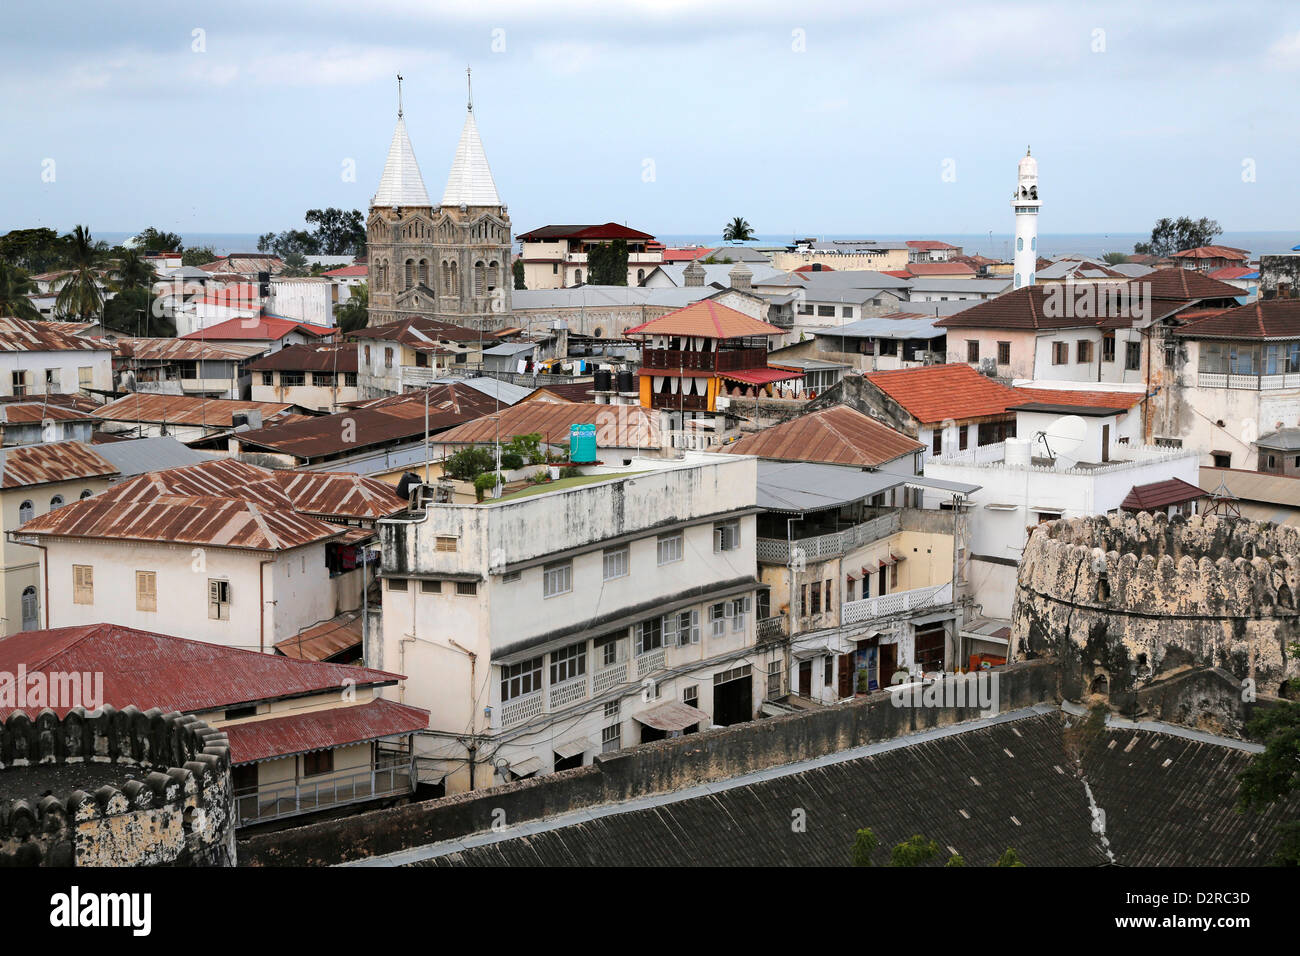 Stonetown of Zanzibar with St Josephs Cathedral and Mosque, Tanzania Stock Photo